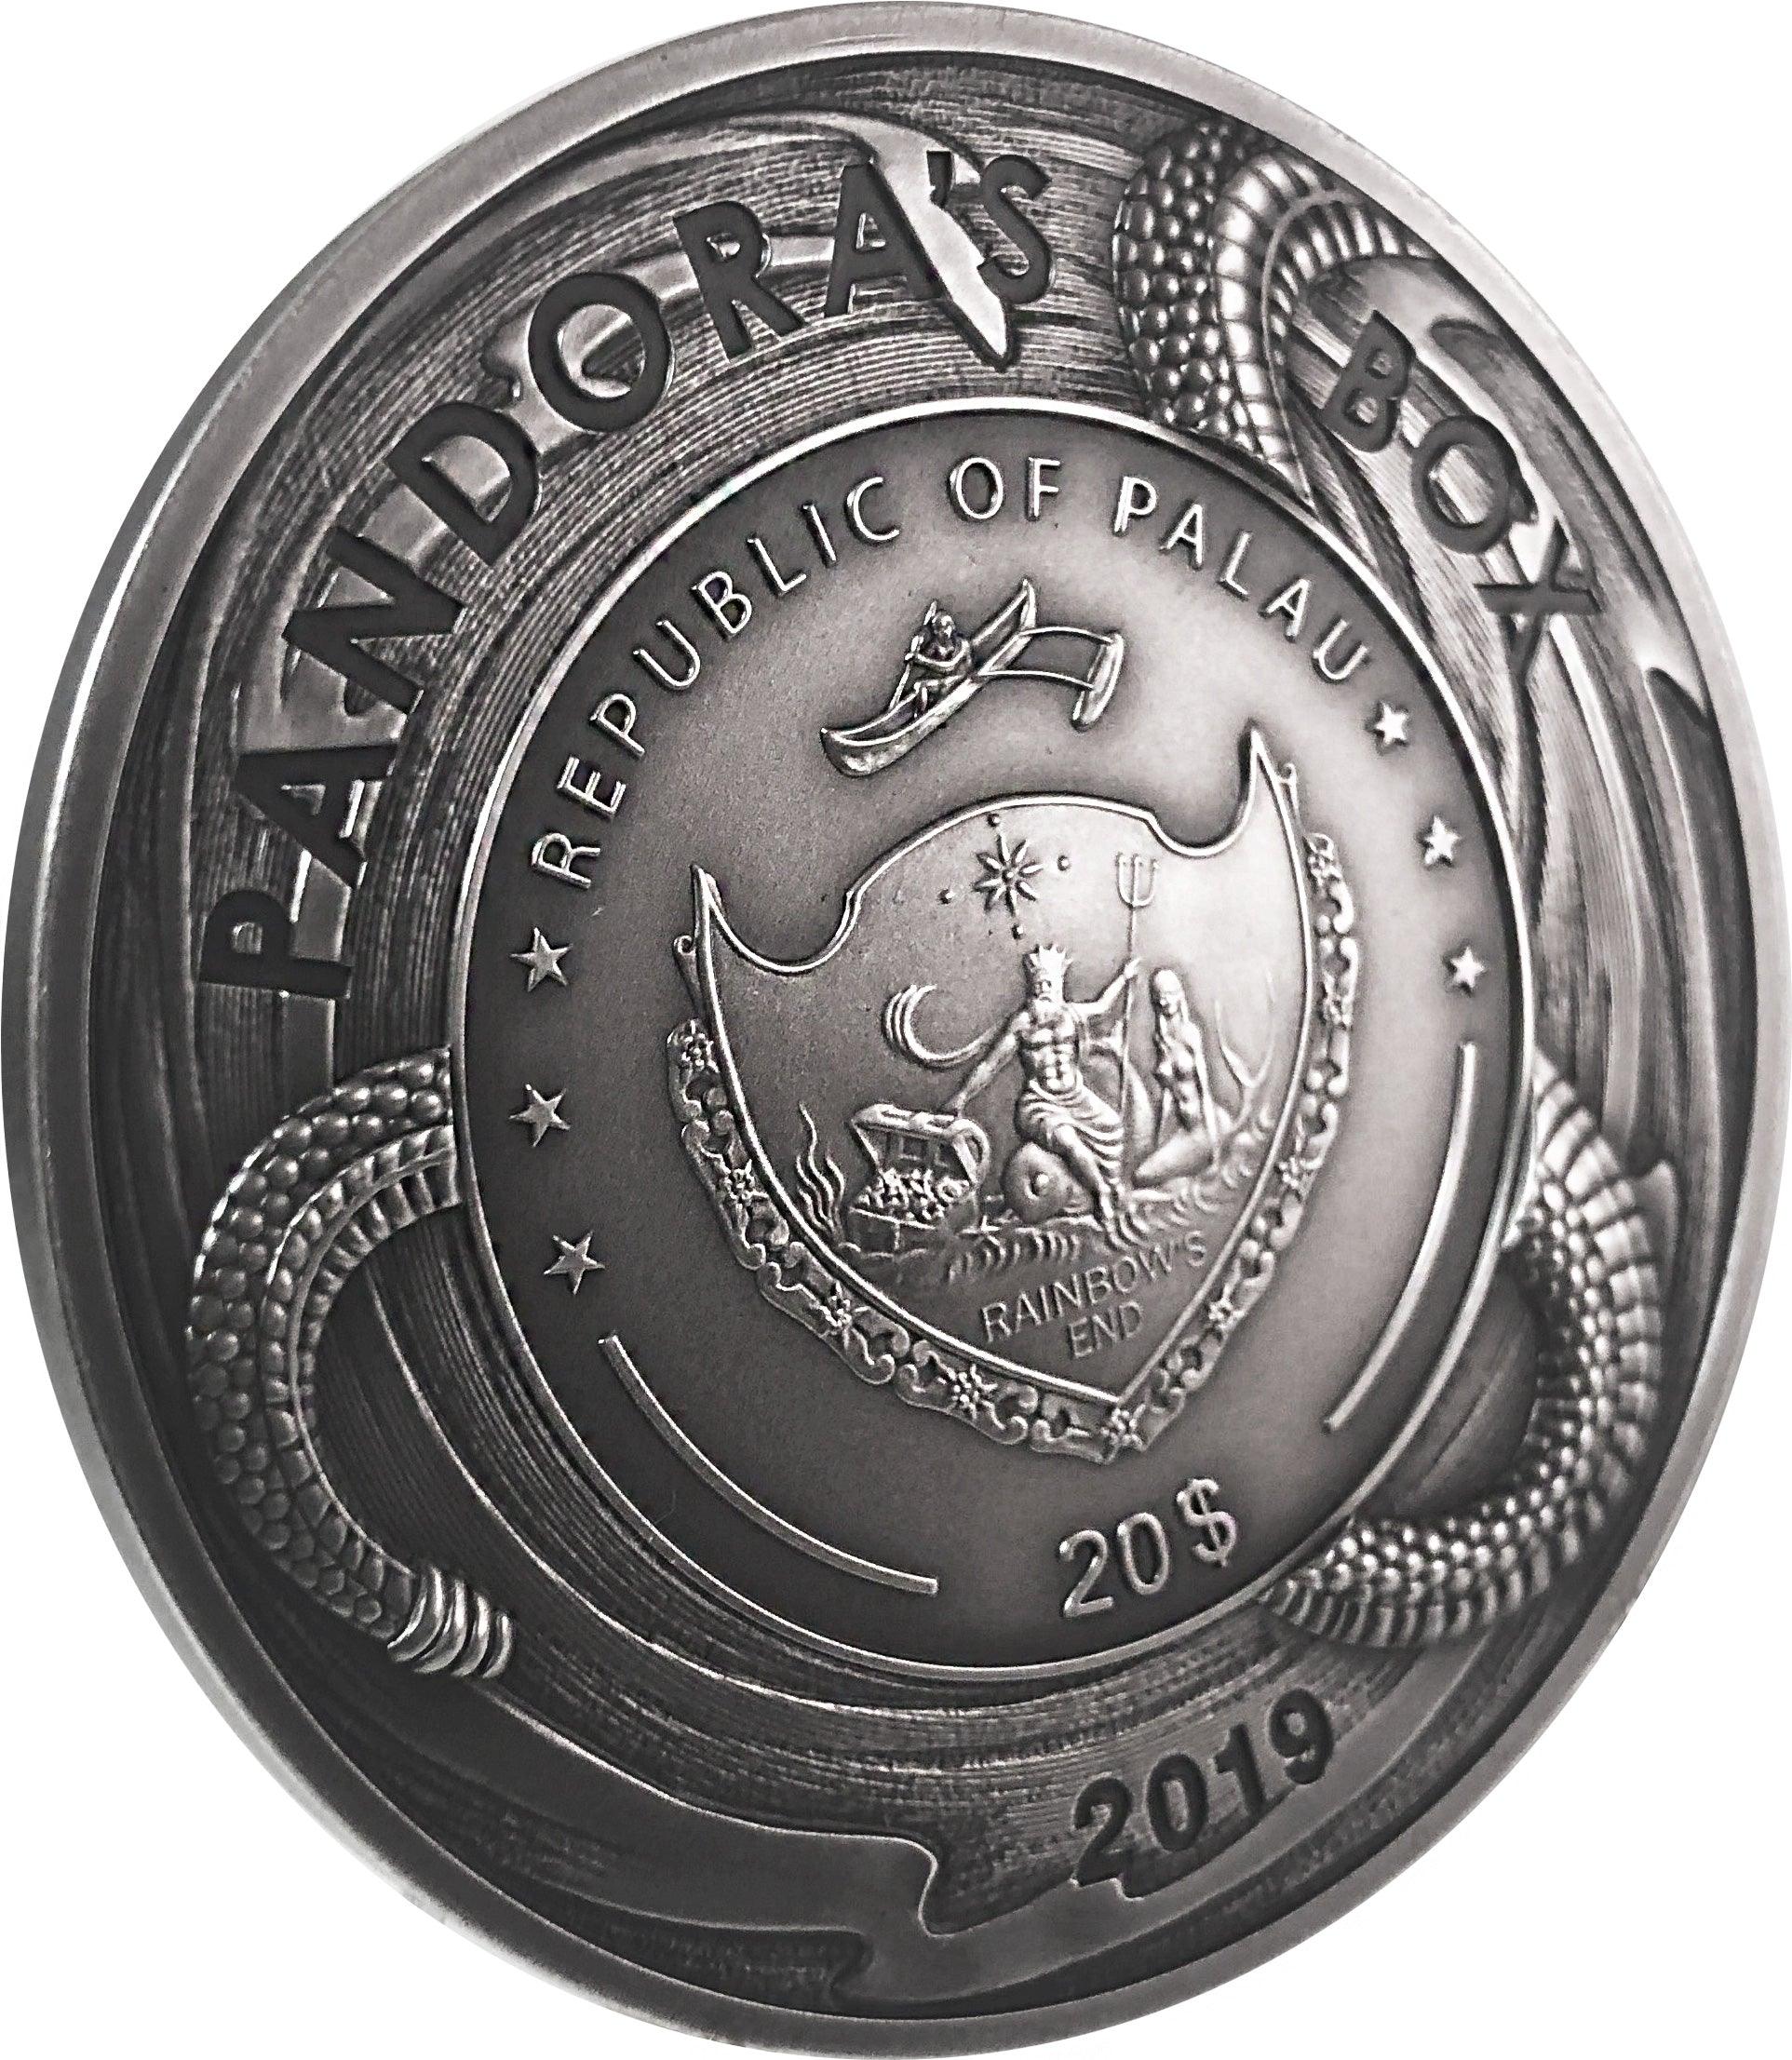 PANDORA BOX Evil Within EHR Epic High Relief 3 Oz Silver Coin $20 Palau 2019 - PARTHAVA COIN